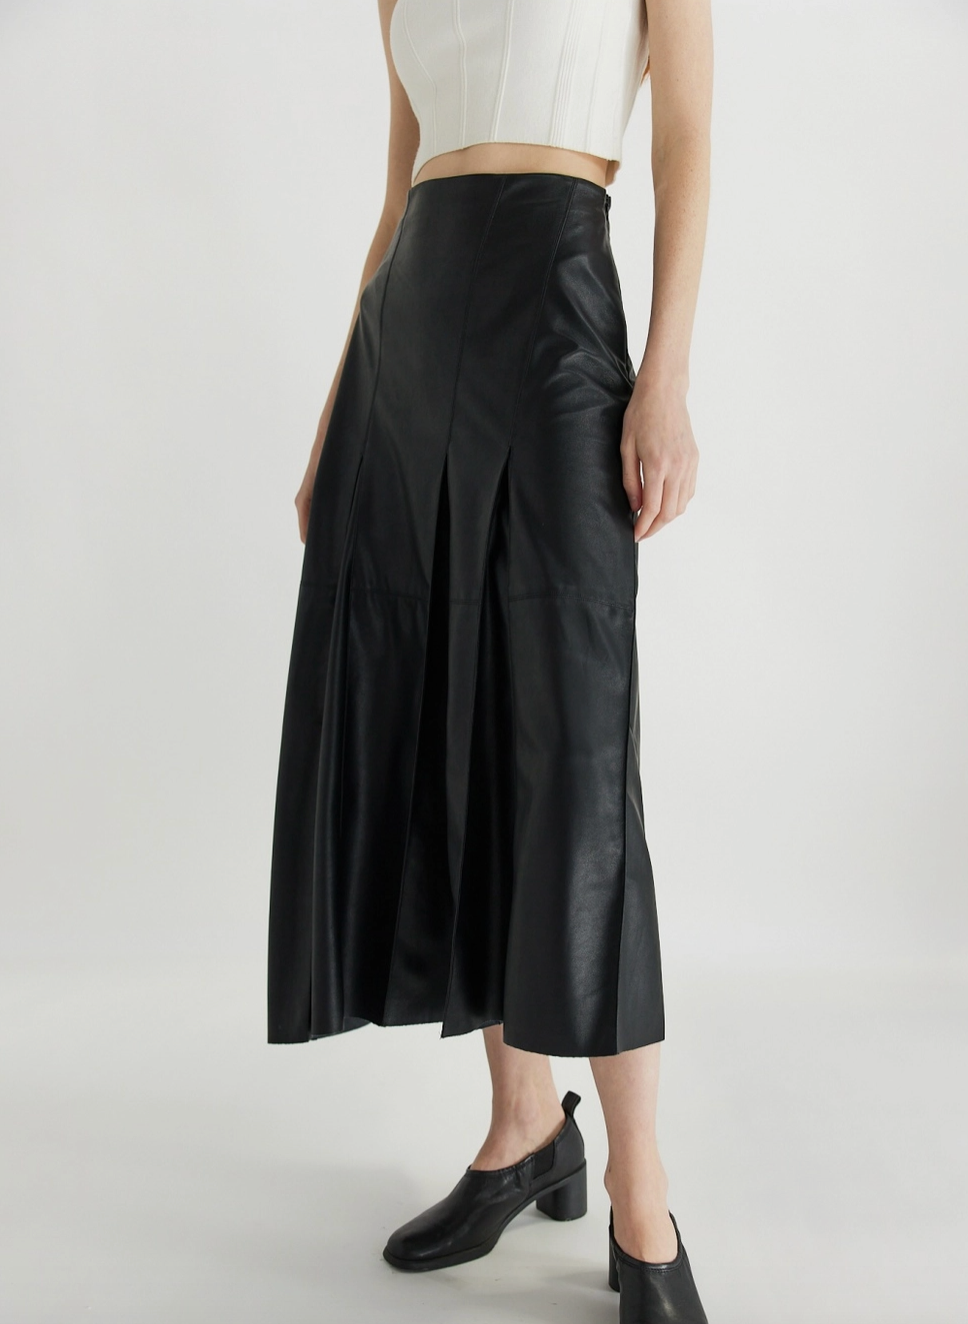 The Deona Skirt